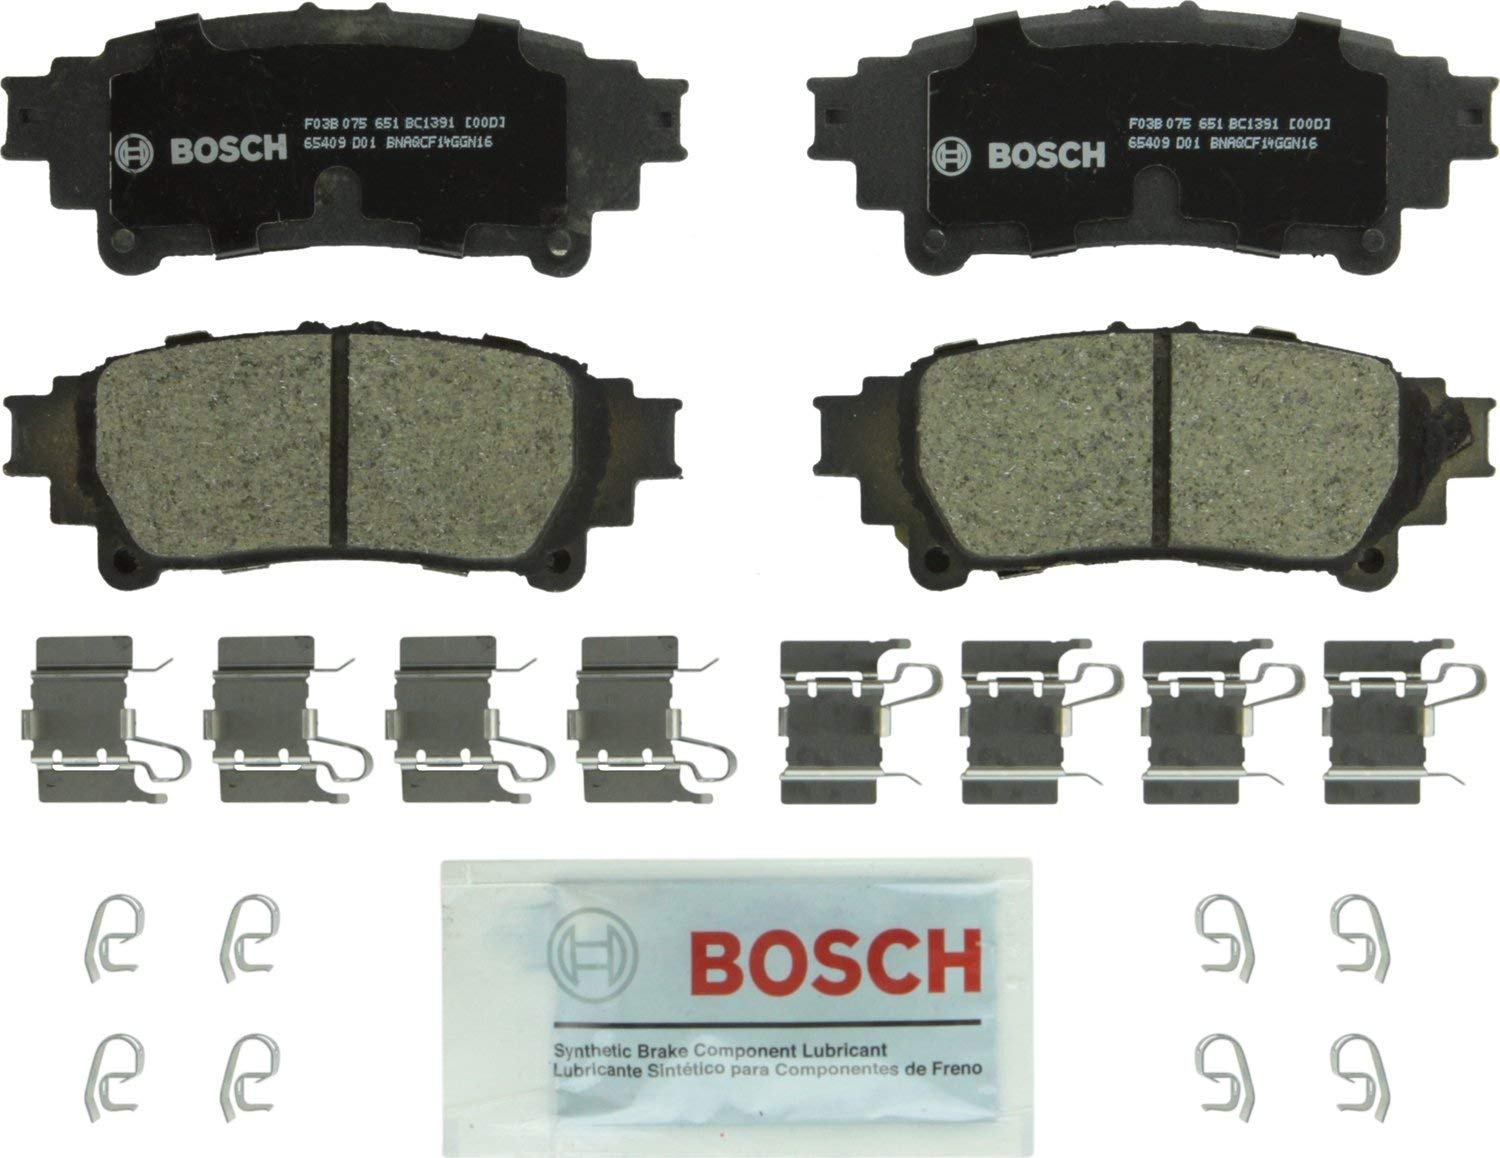 Bosch BC1391 QuietCast Premium Ceramic Disc Brake Pads: Lexus GS200t, GS350, GS450h, GS/IS Turbo, IS200t, IS250, IS300, IS350 Turbo, RC350, RX350, RX450h; Toyota Highlander, Mirai, Prius, Sienna, Rear